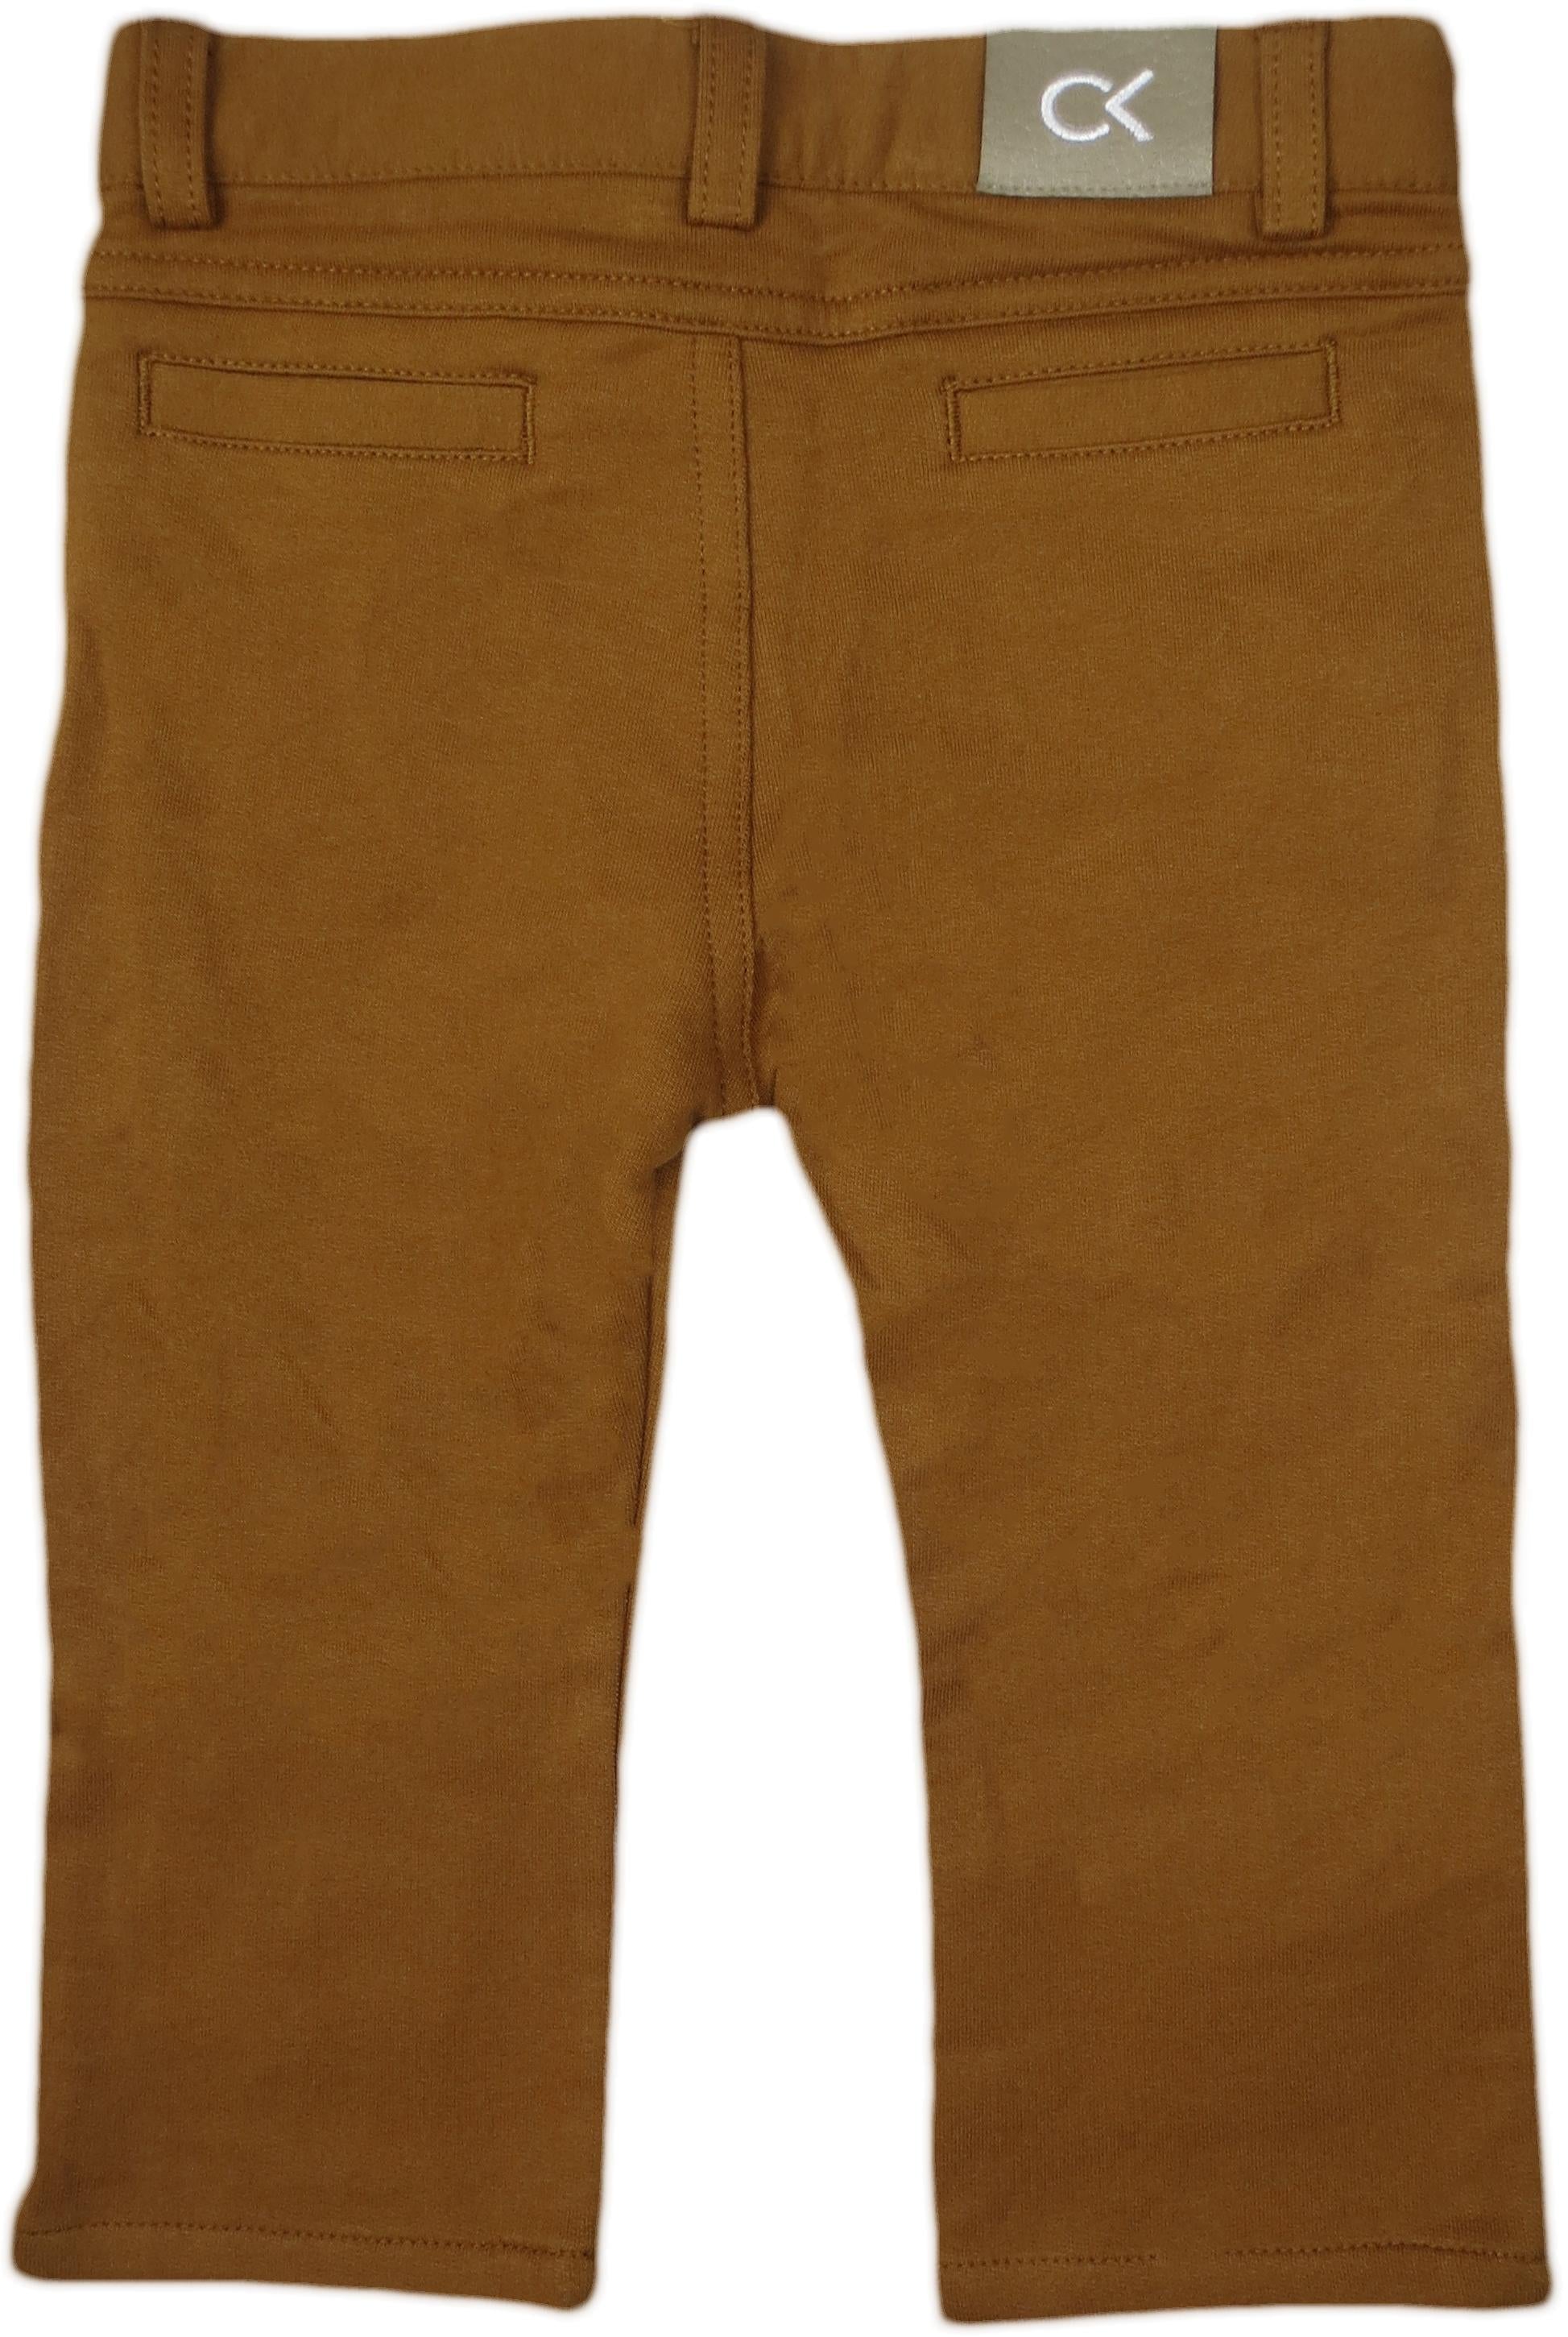 Buy Olive Green Chino Pants for Boys Online at Jack&Jones Junior |149733402